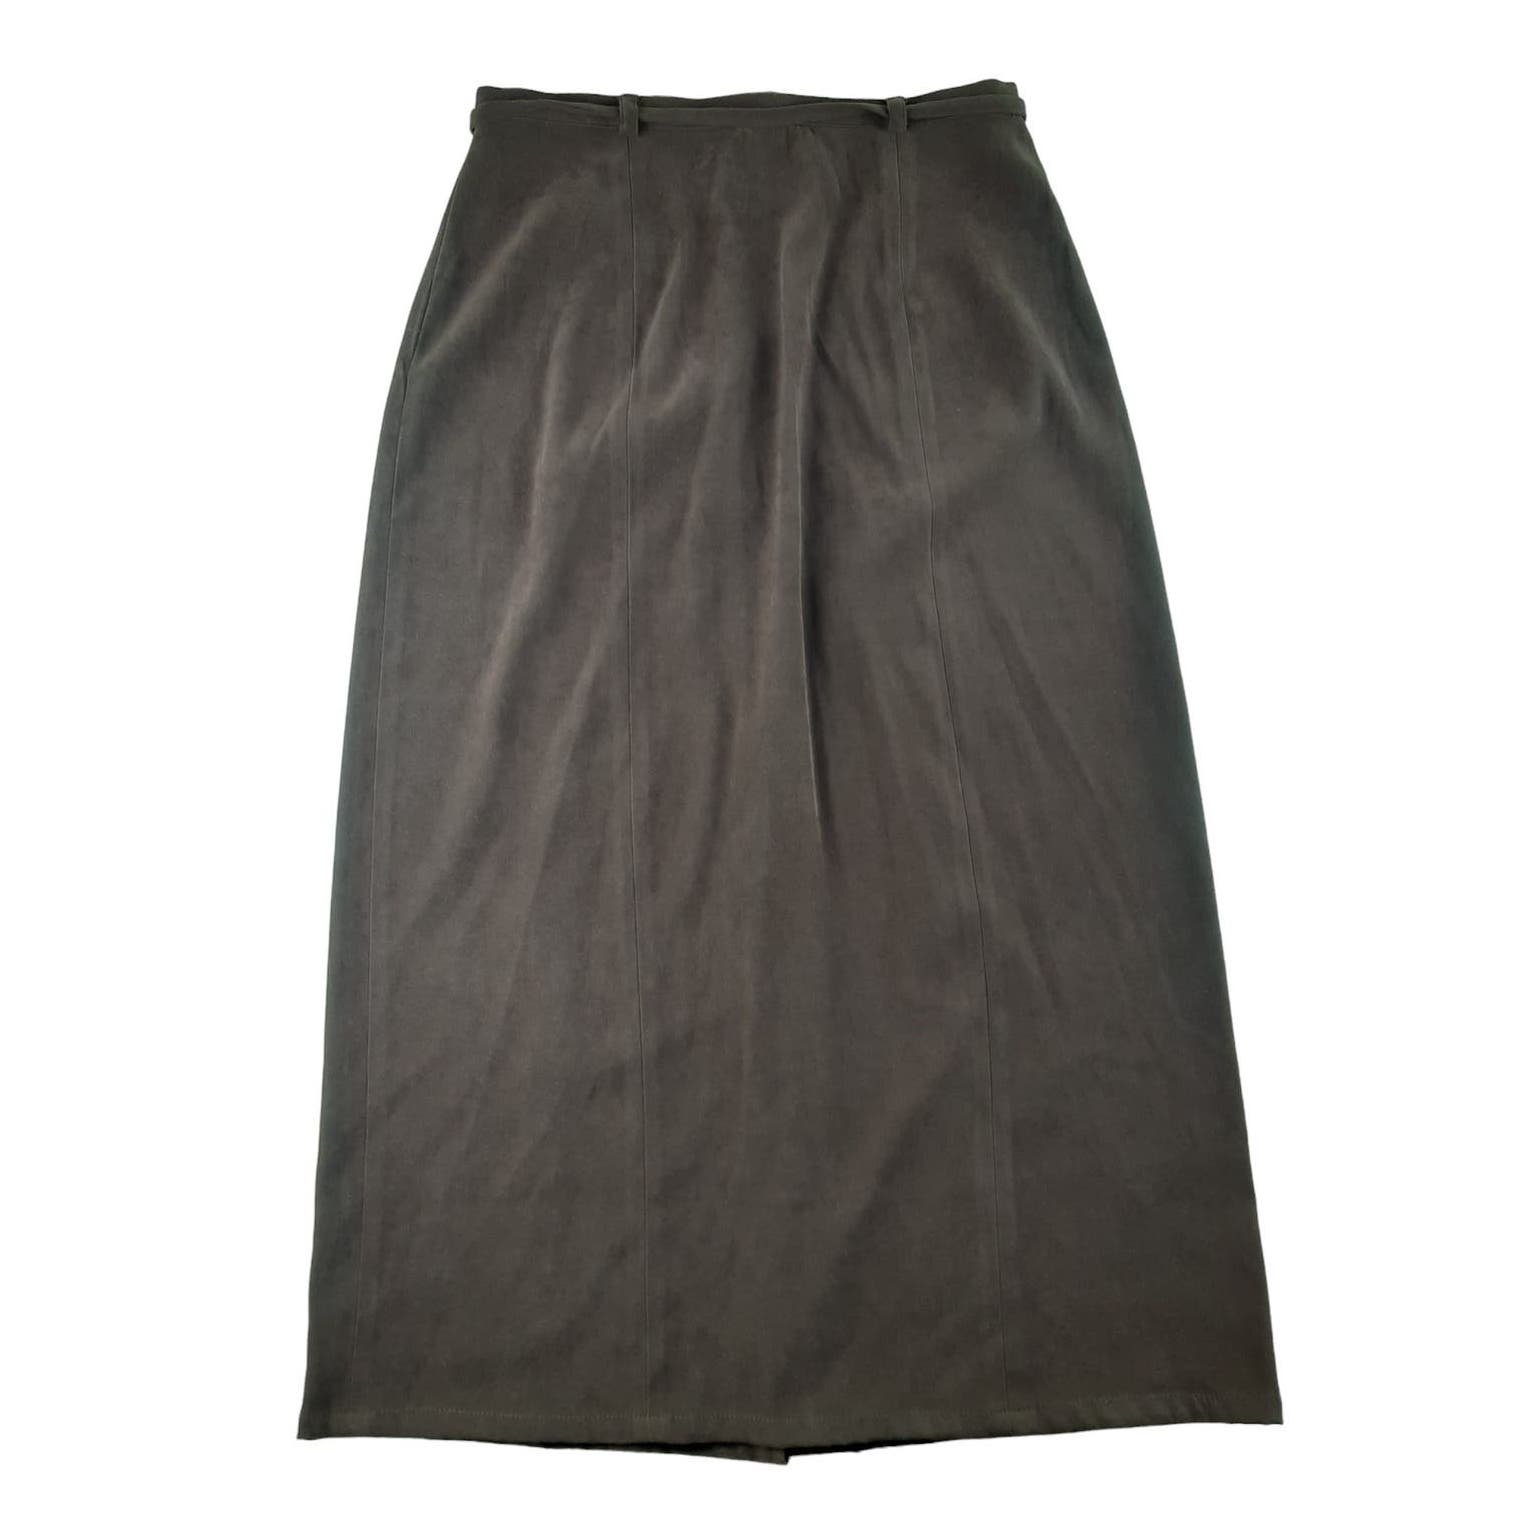 good price Vintage Talbots Womens Brown Faux Suede Midi Skirt Tie Waist Slit Back Boho 4 nPcmSJ3O9 US Sale